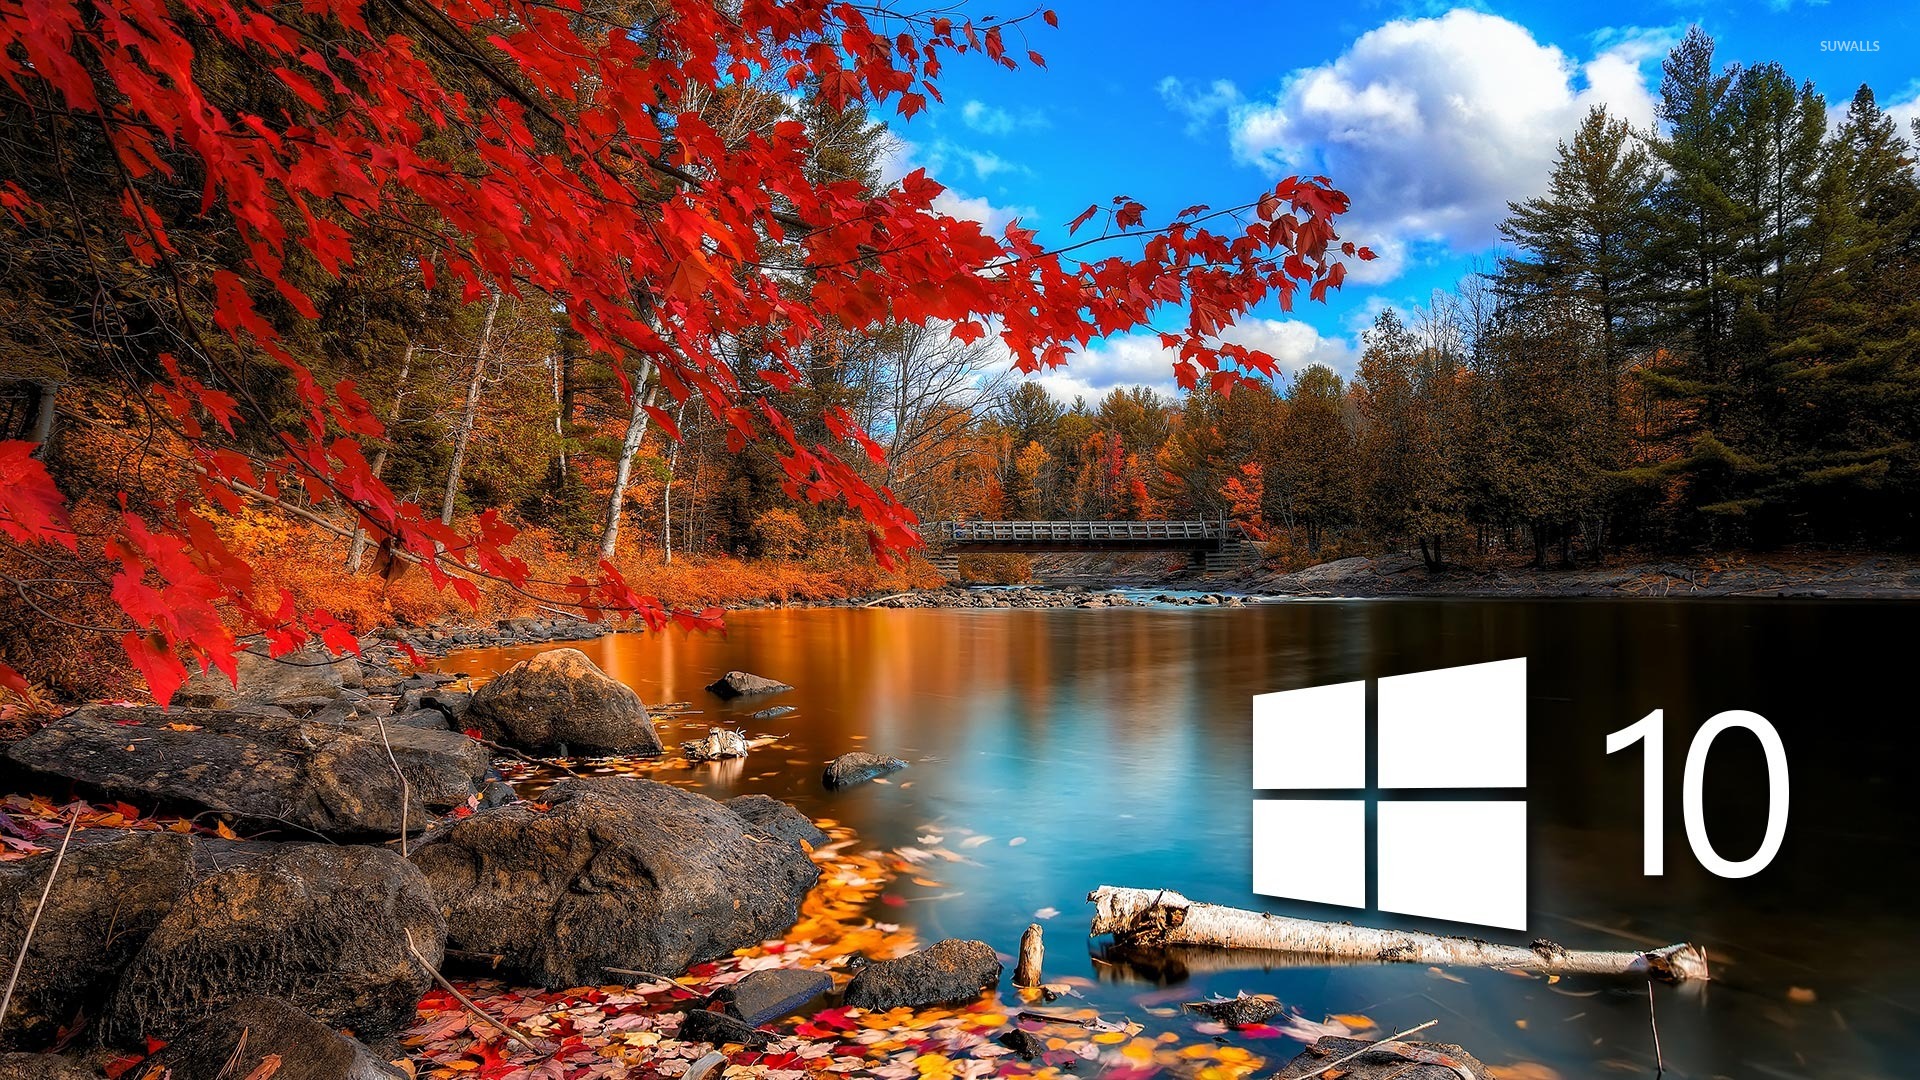 Картинки виндовс 10. Рабочий стол Windows 10. Картинки из виндовс 10. Красивый рабочий стол для Windows 10. Заставка на рабочий стол Windows 10.